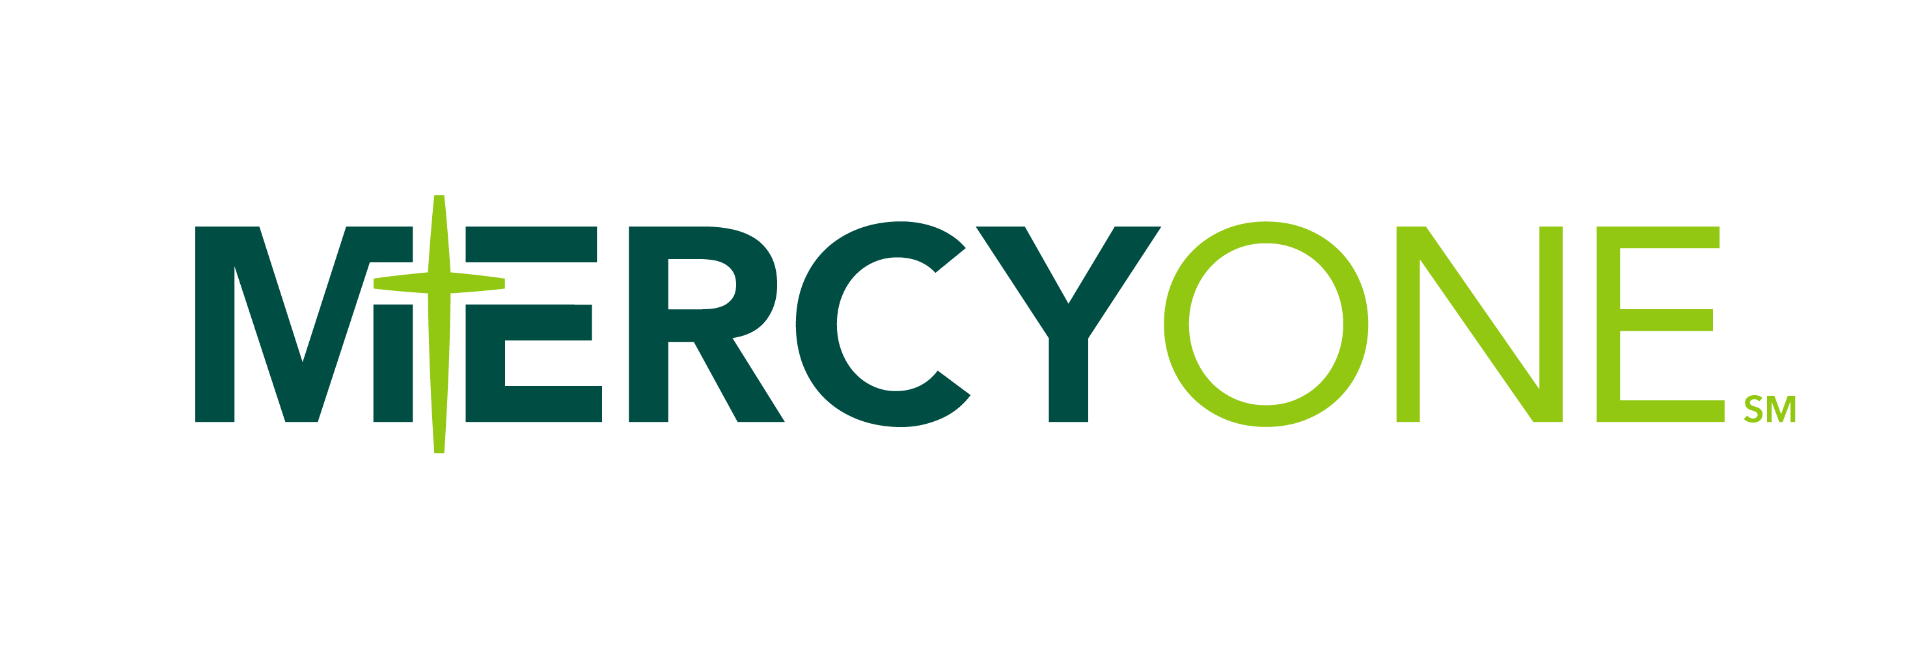 Mercy One Logo